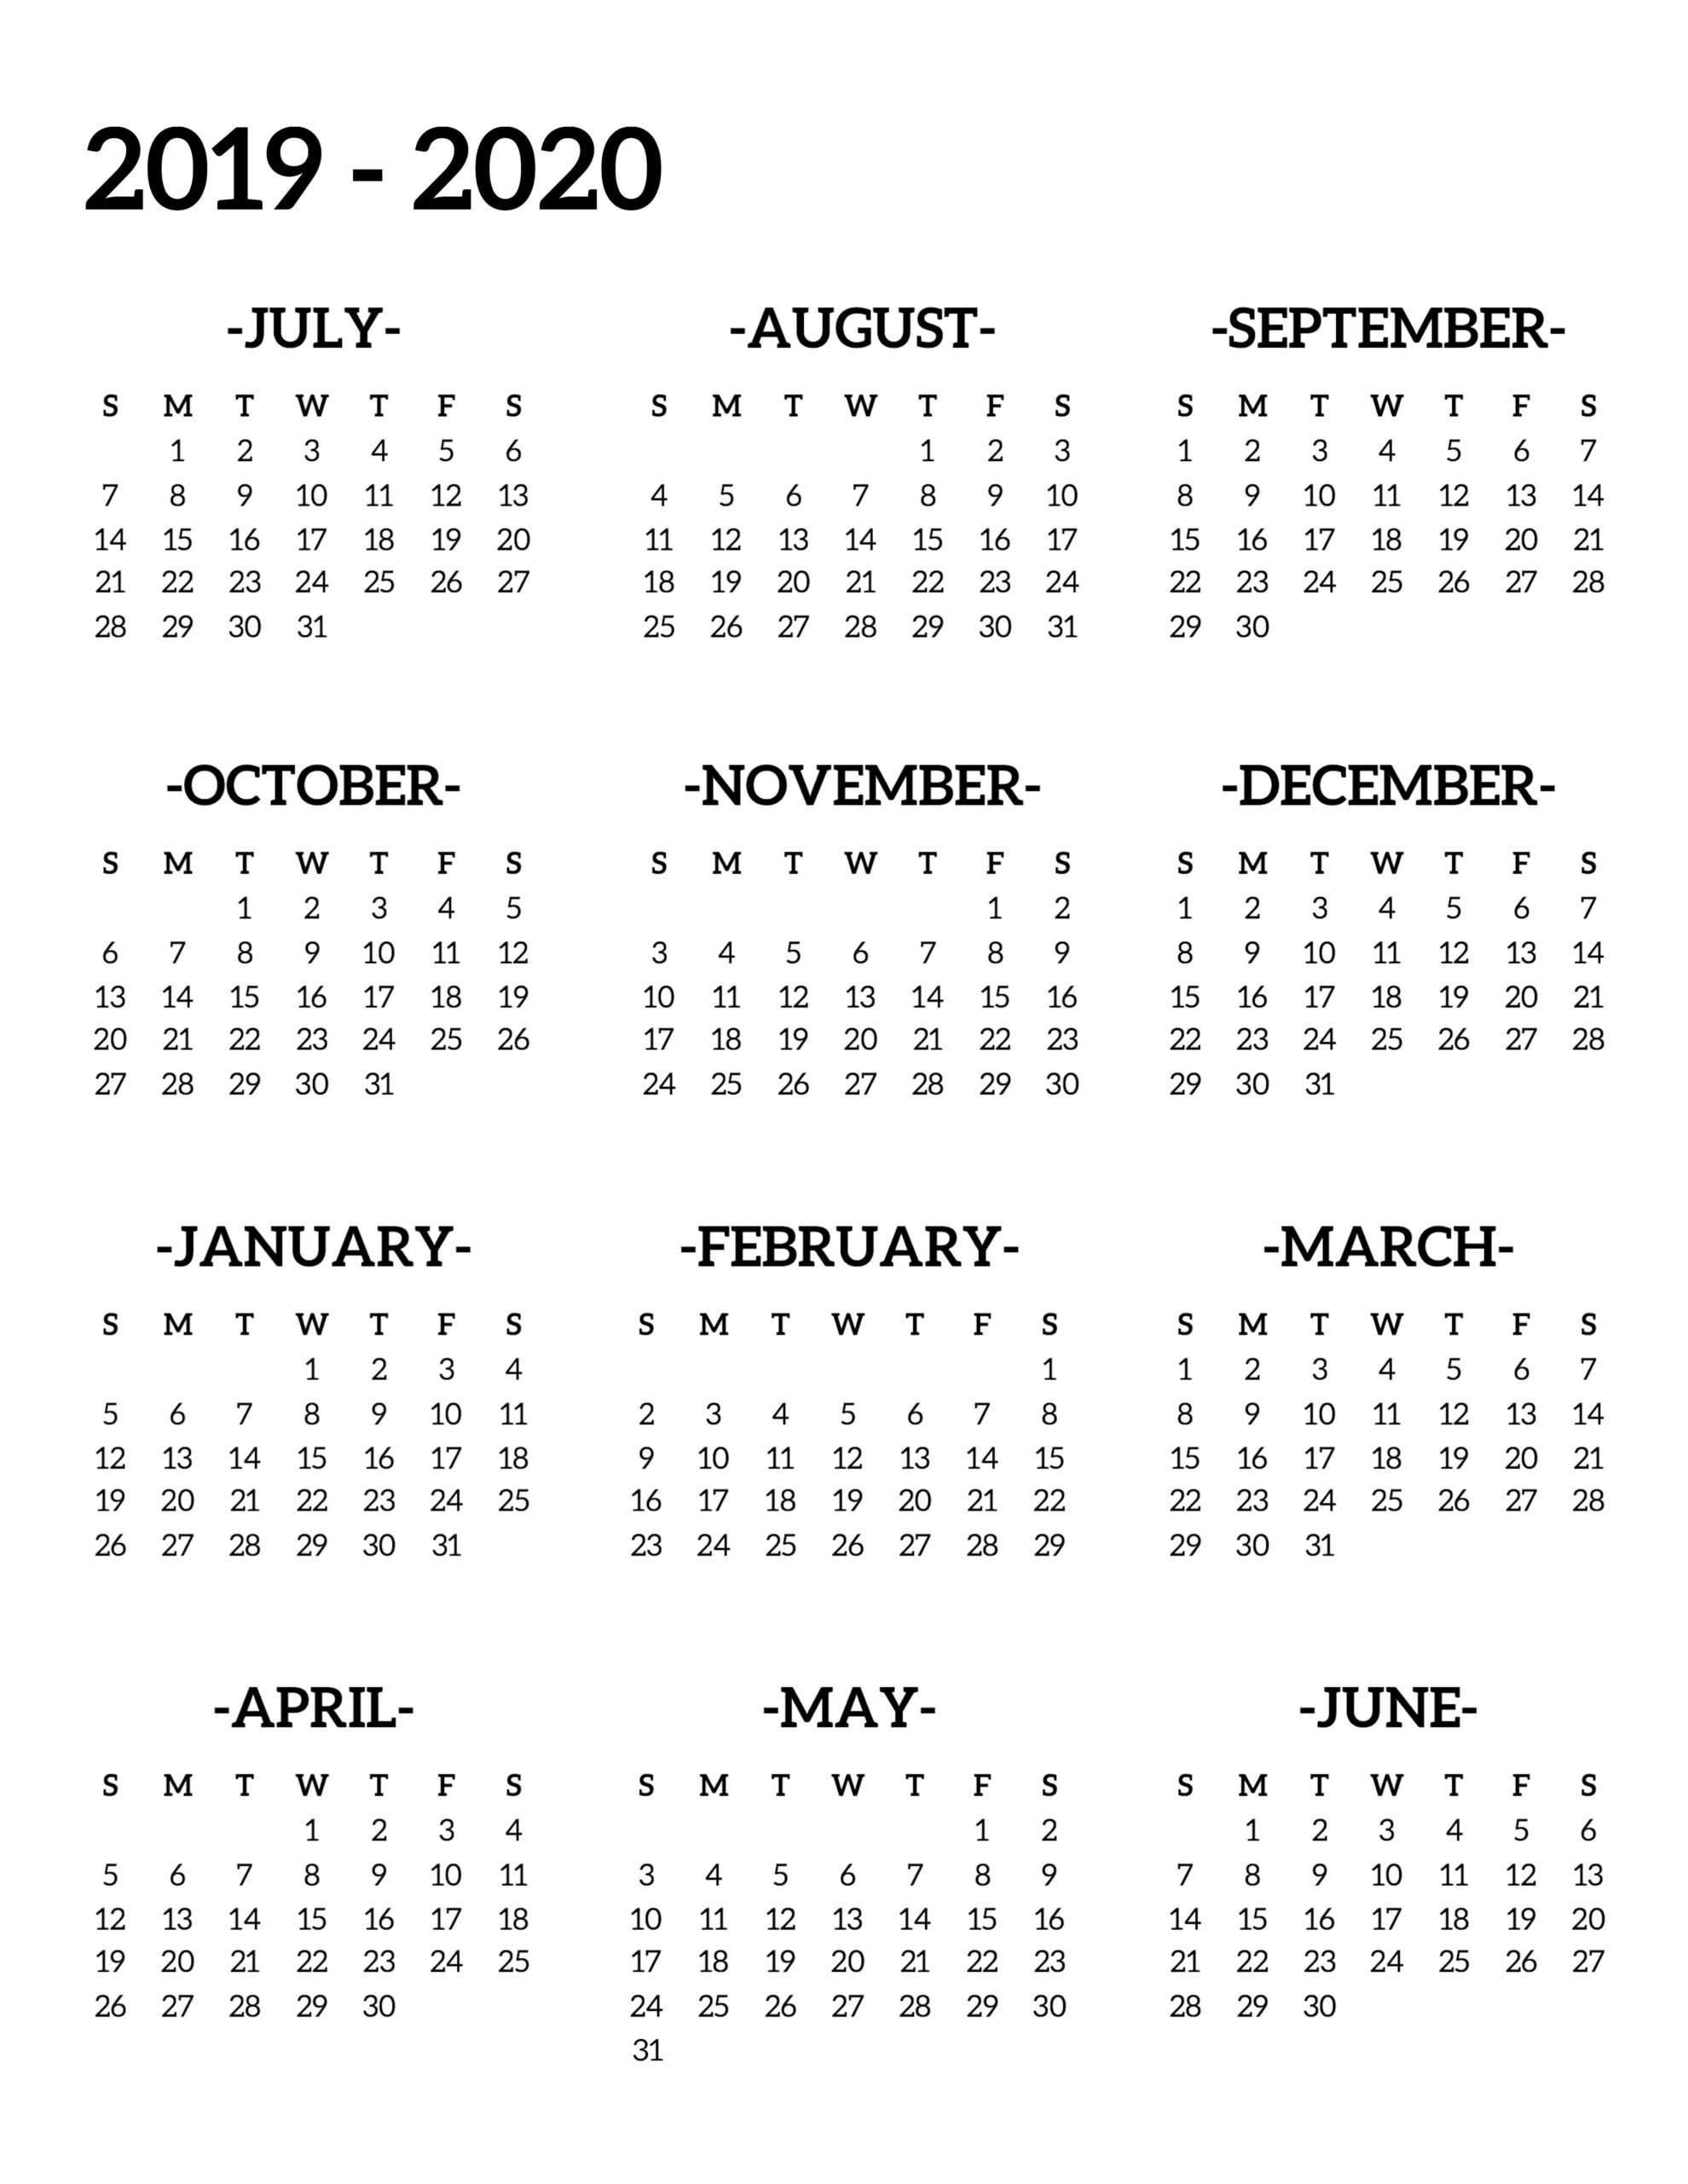 2019-2020 One Page School Calendar Printable - Paper Trail Design regarding Year At A Glance 2019-2020 School Calendar